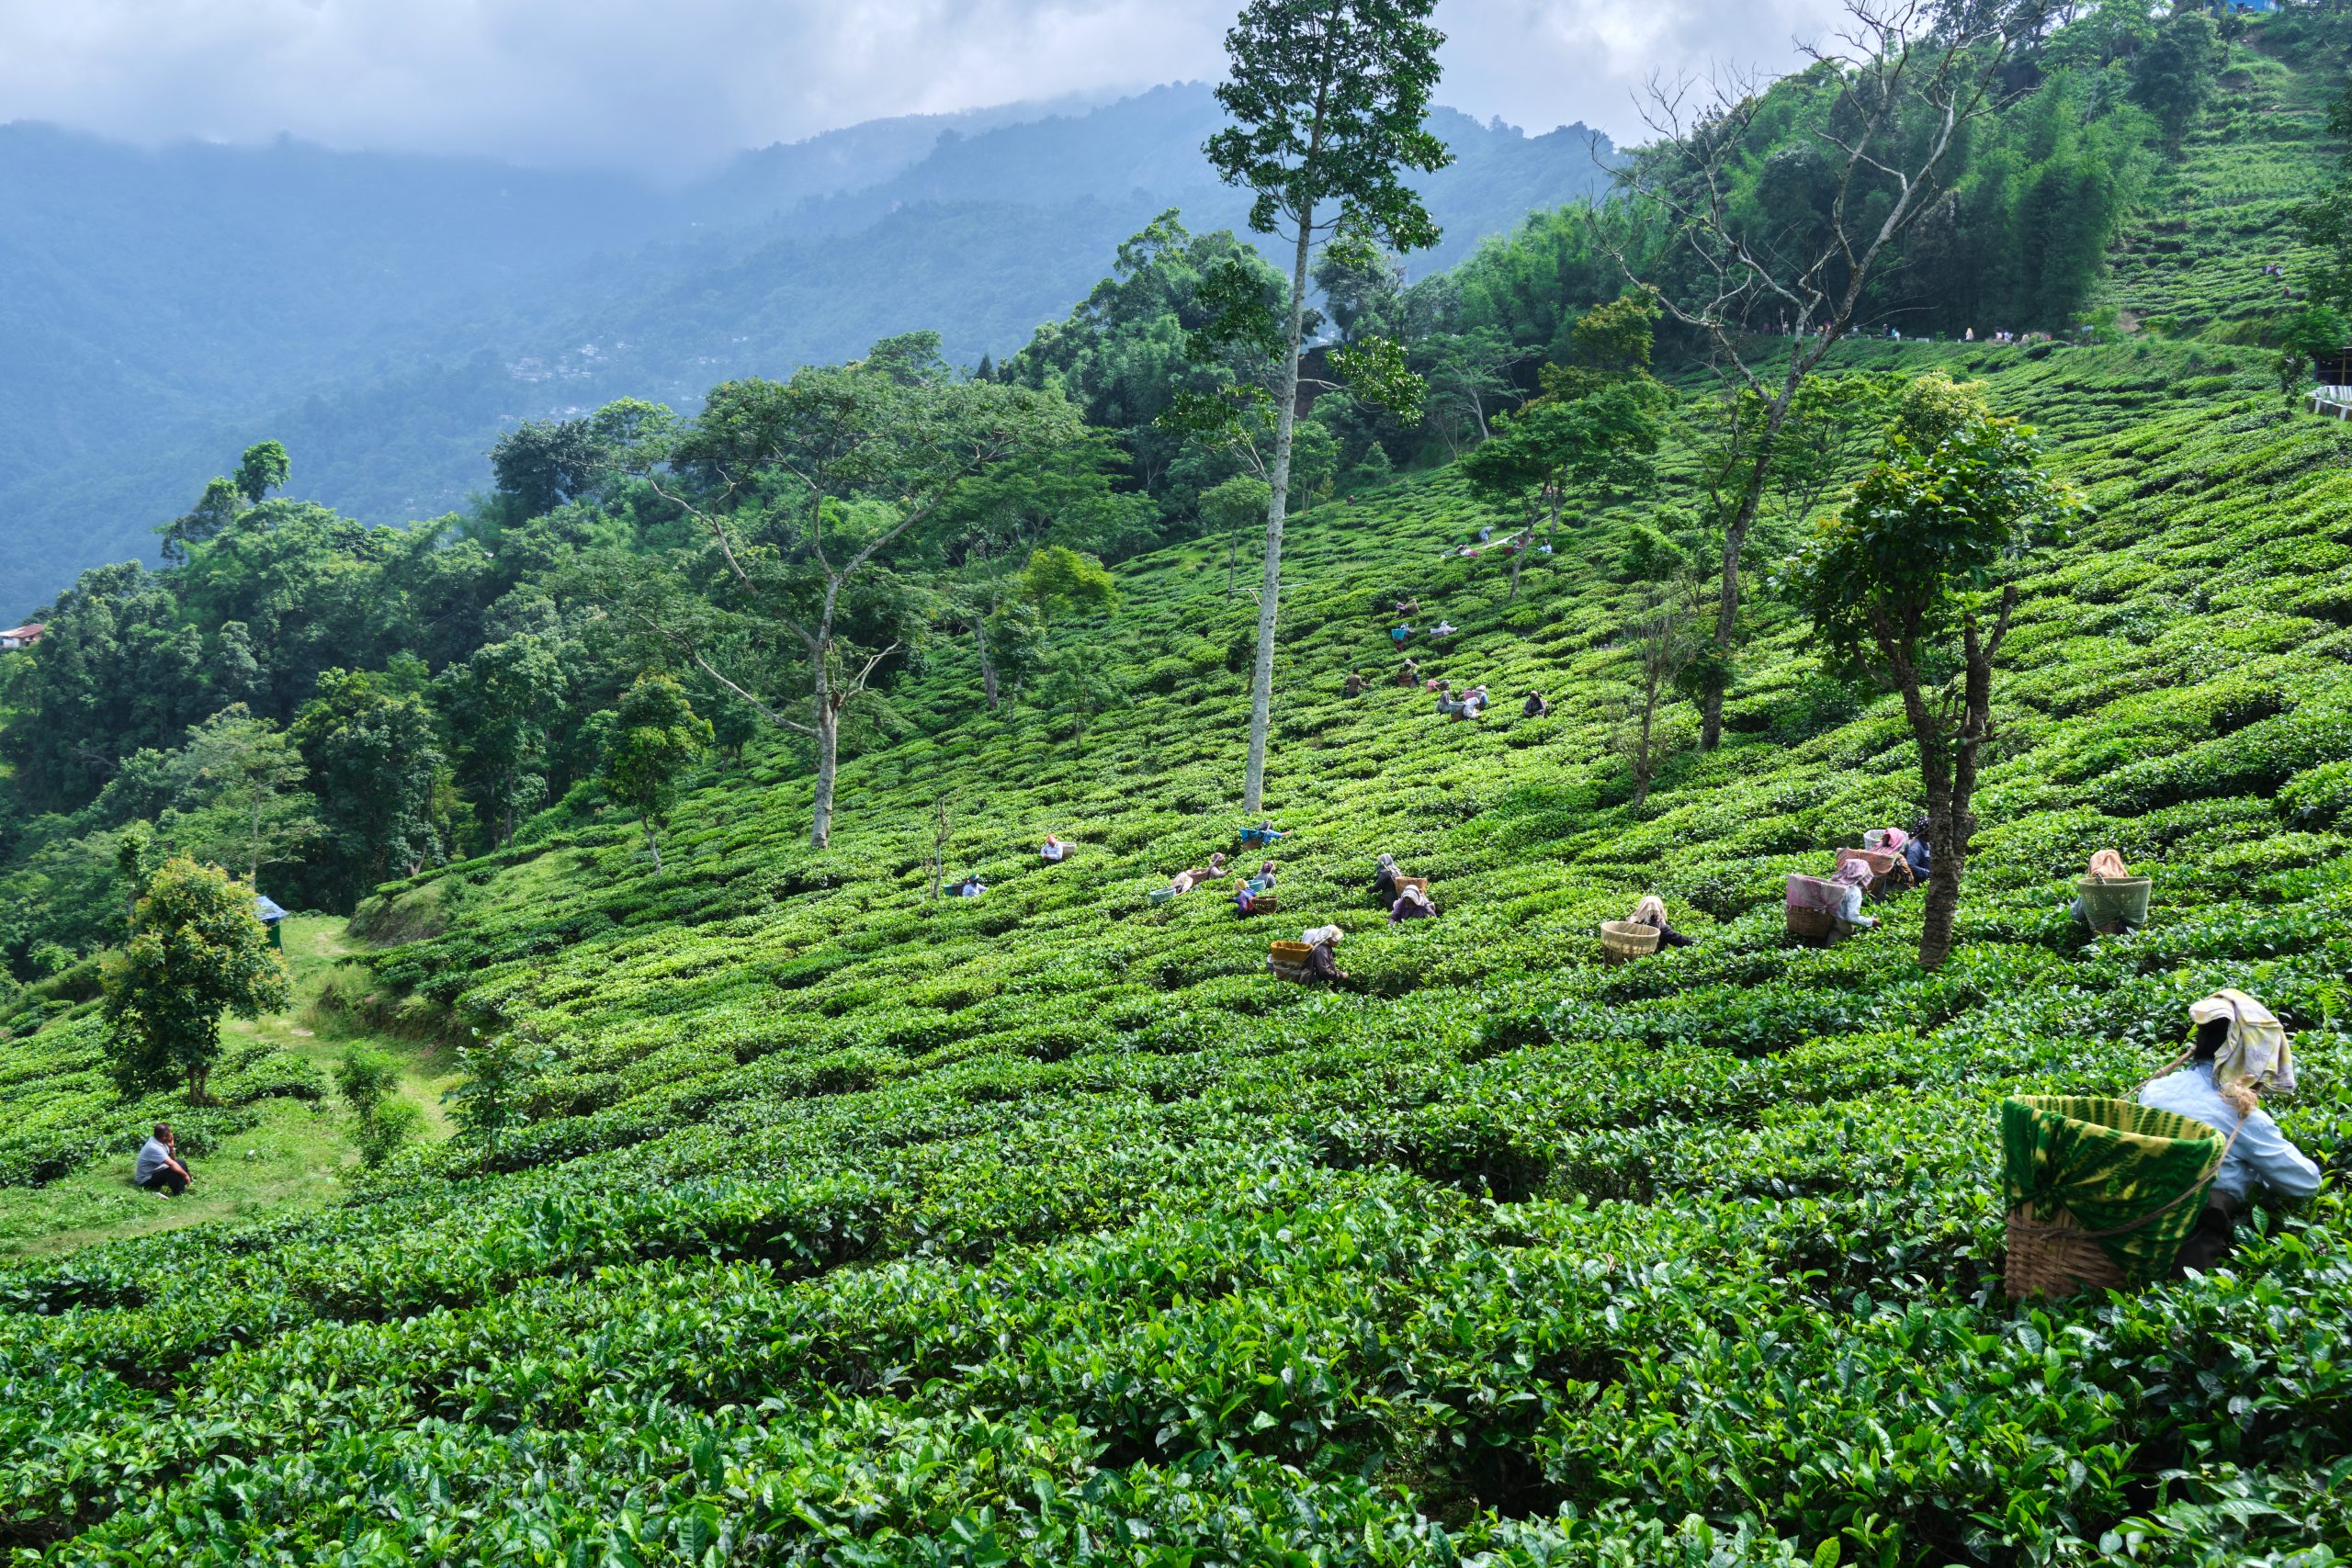 Women workers plucking tea leaves in tea gardens